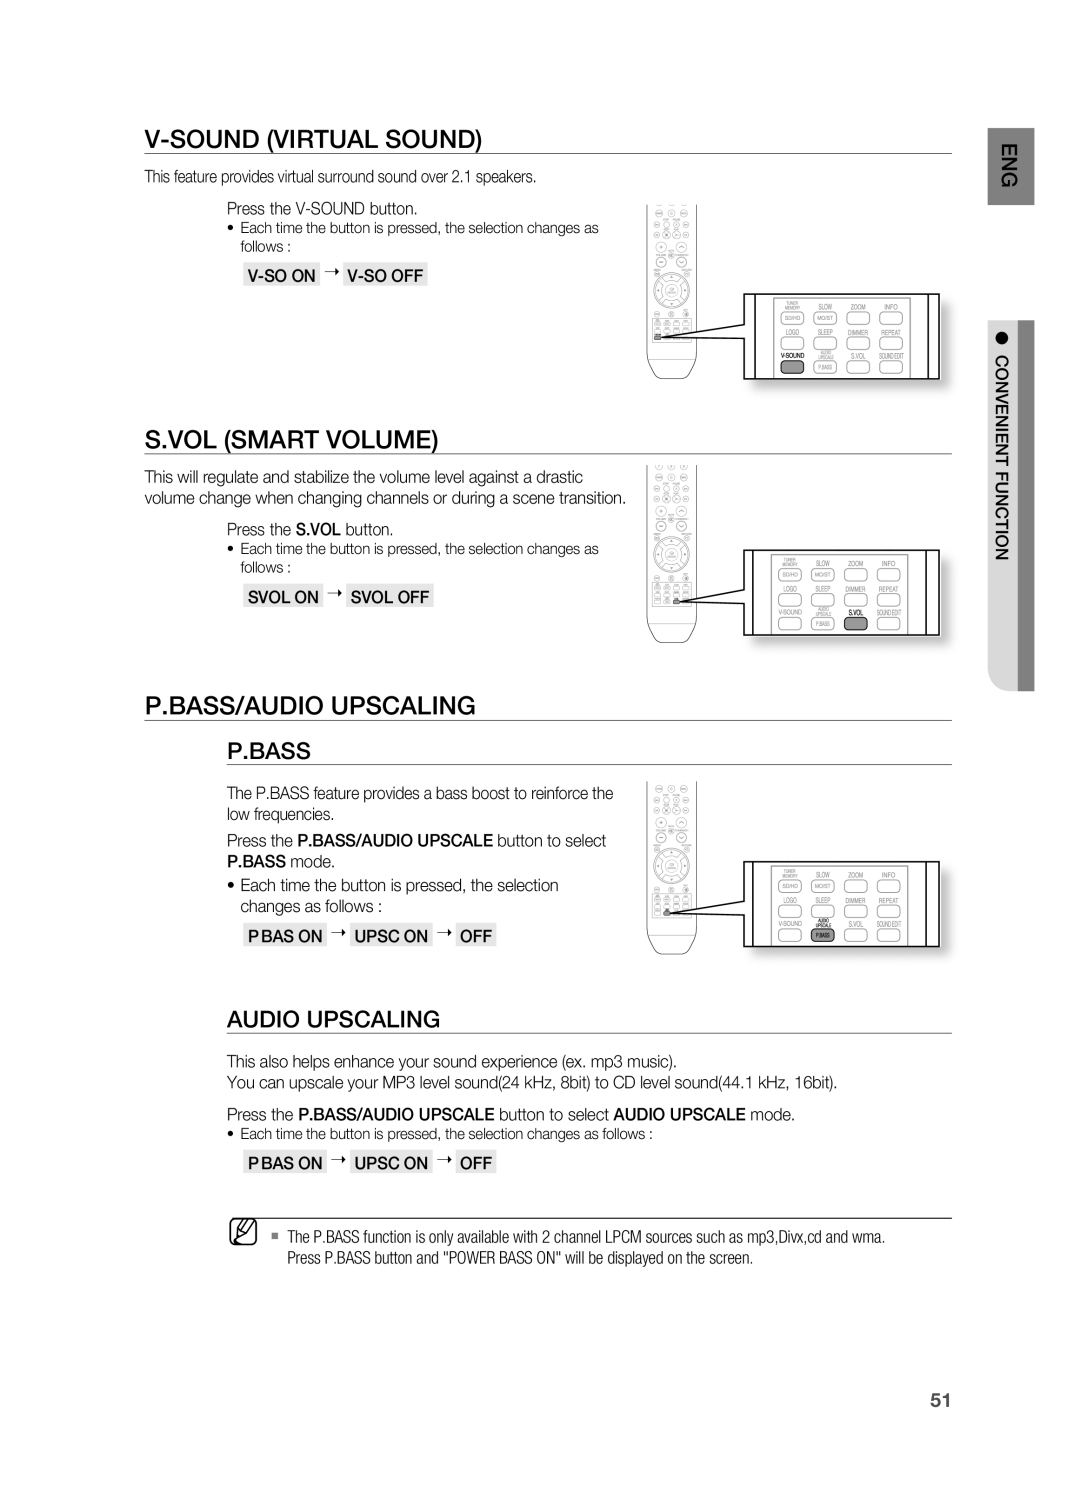 Samsung HT-X810 user manual V-SOUNDVIrTUAl SOUND, S.VOl SMArT VOlUME, P.BASS/AUDIO UPSCAlING, P.Bass 